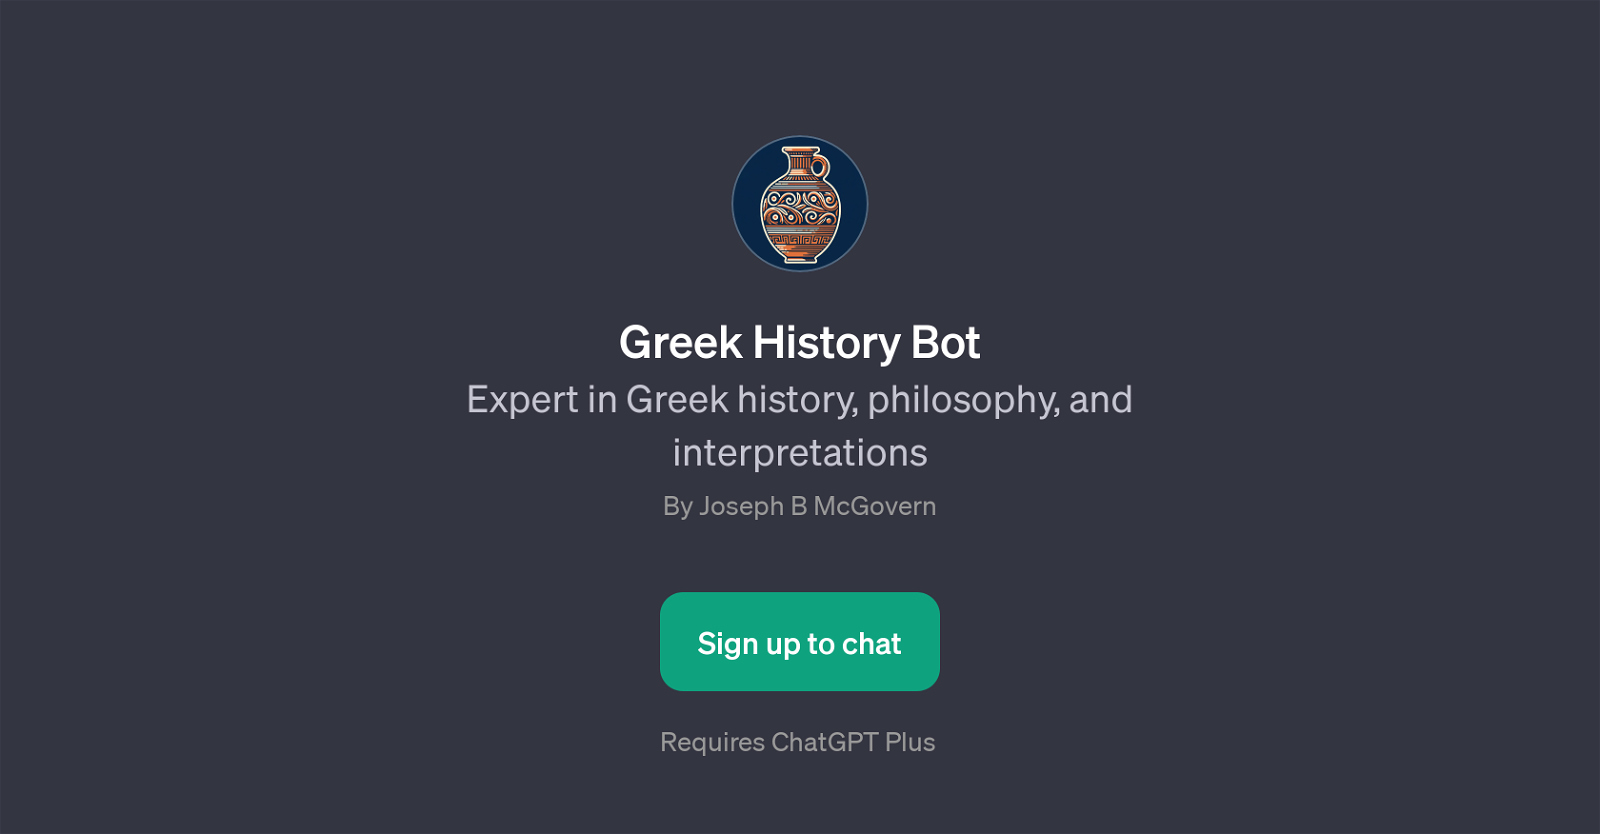 Greek History Bot website